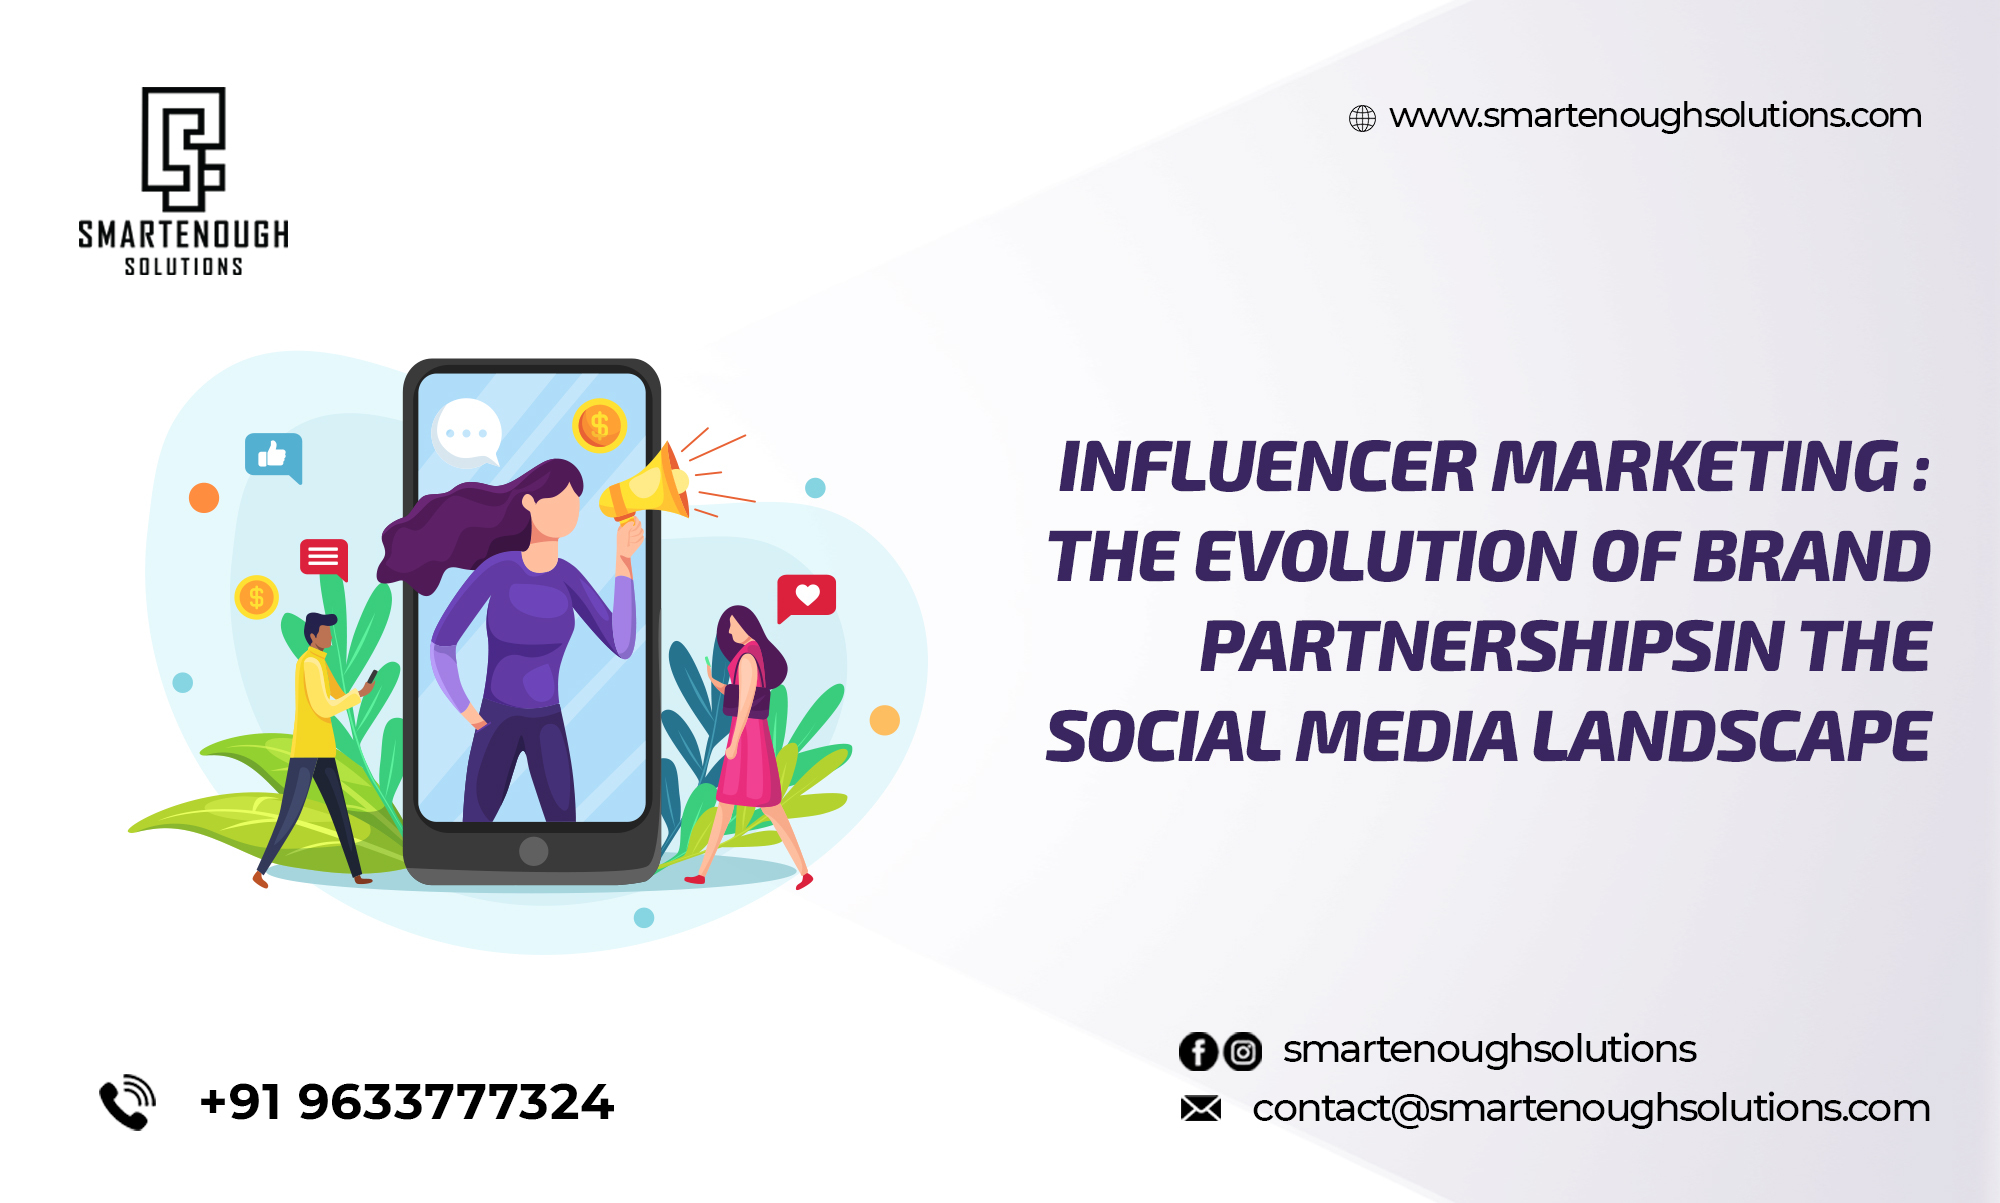 Influencer Marketing : The Evolution of Brand Partnerships in the Social Media Landscape